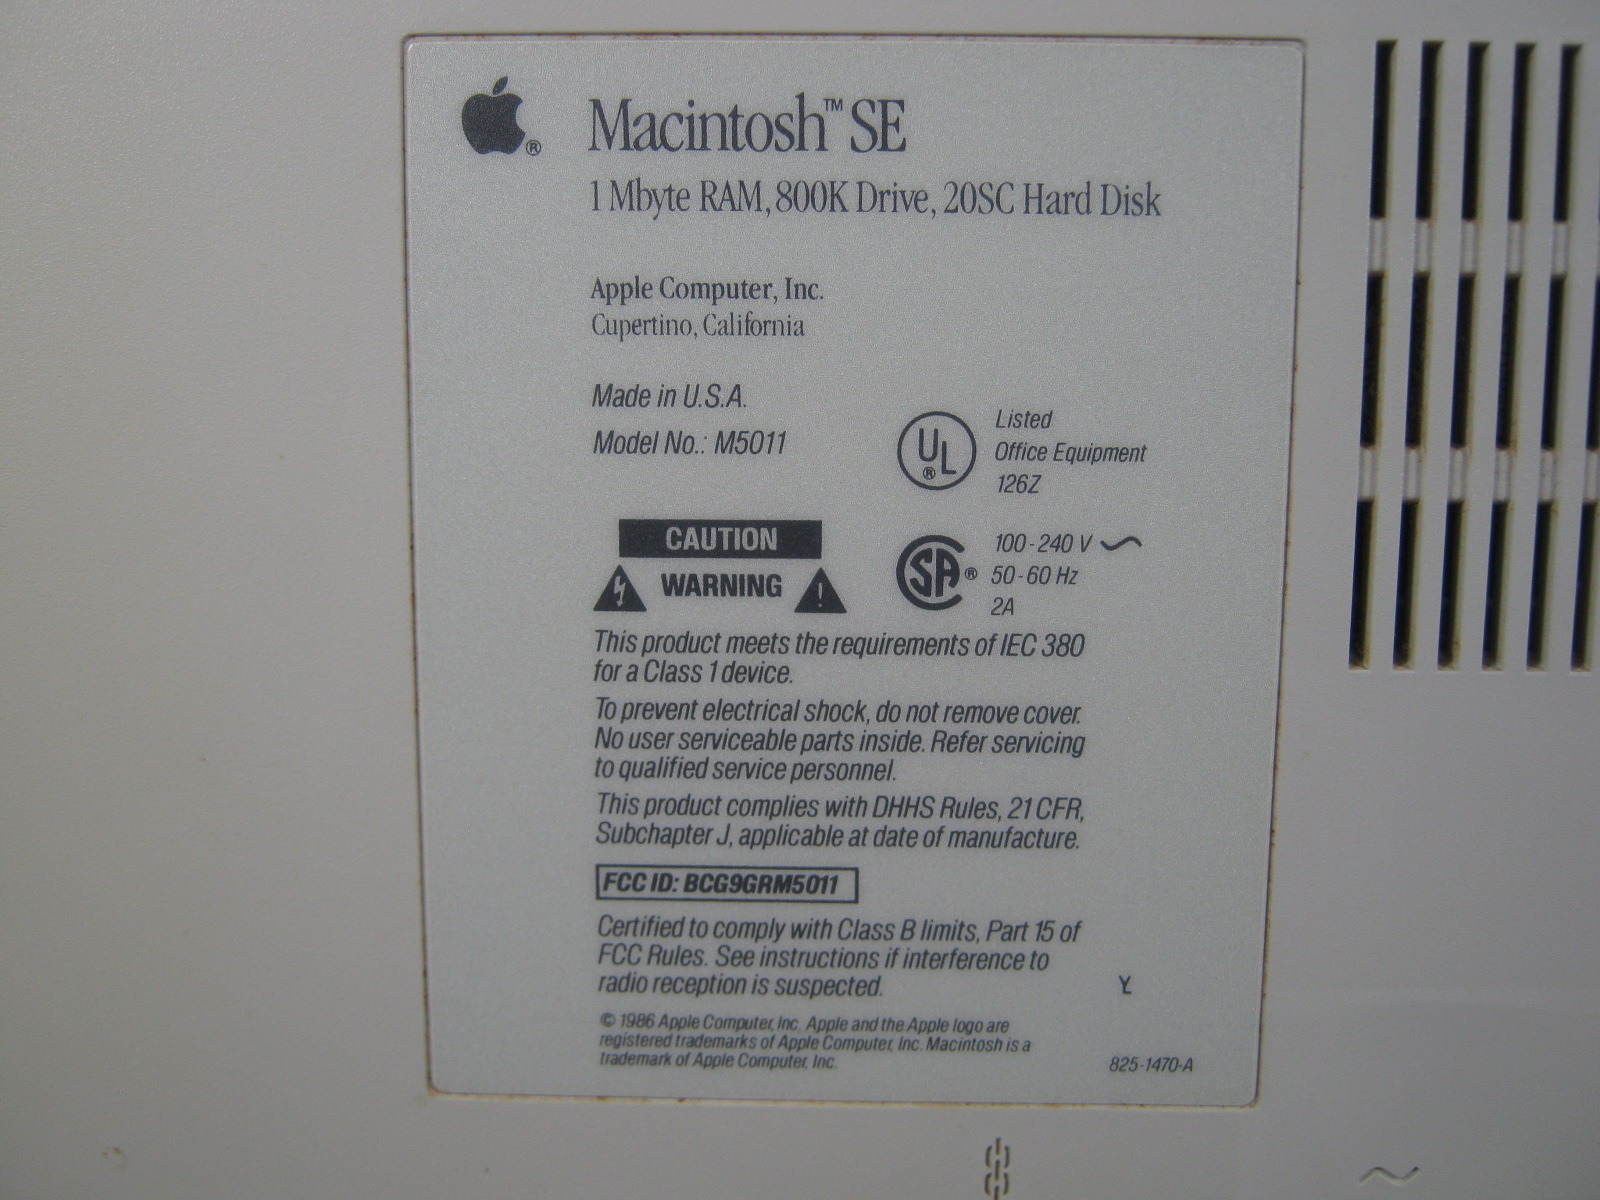 Vtg Apple Macintosh SE Desktop Computer 1MB Ram 800k Drive Mouse Keyboard In Box 5